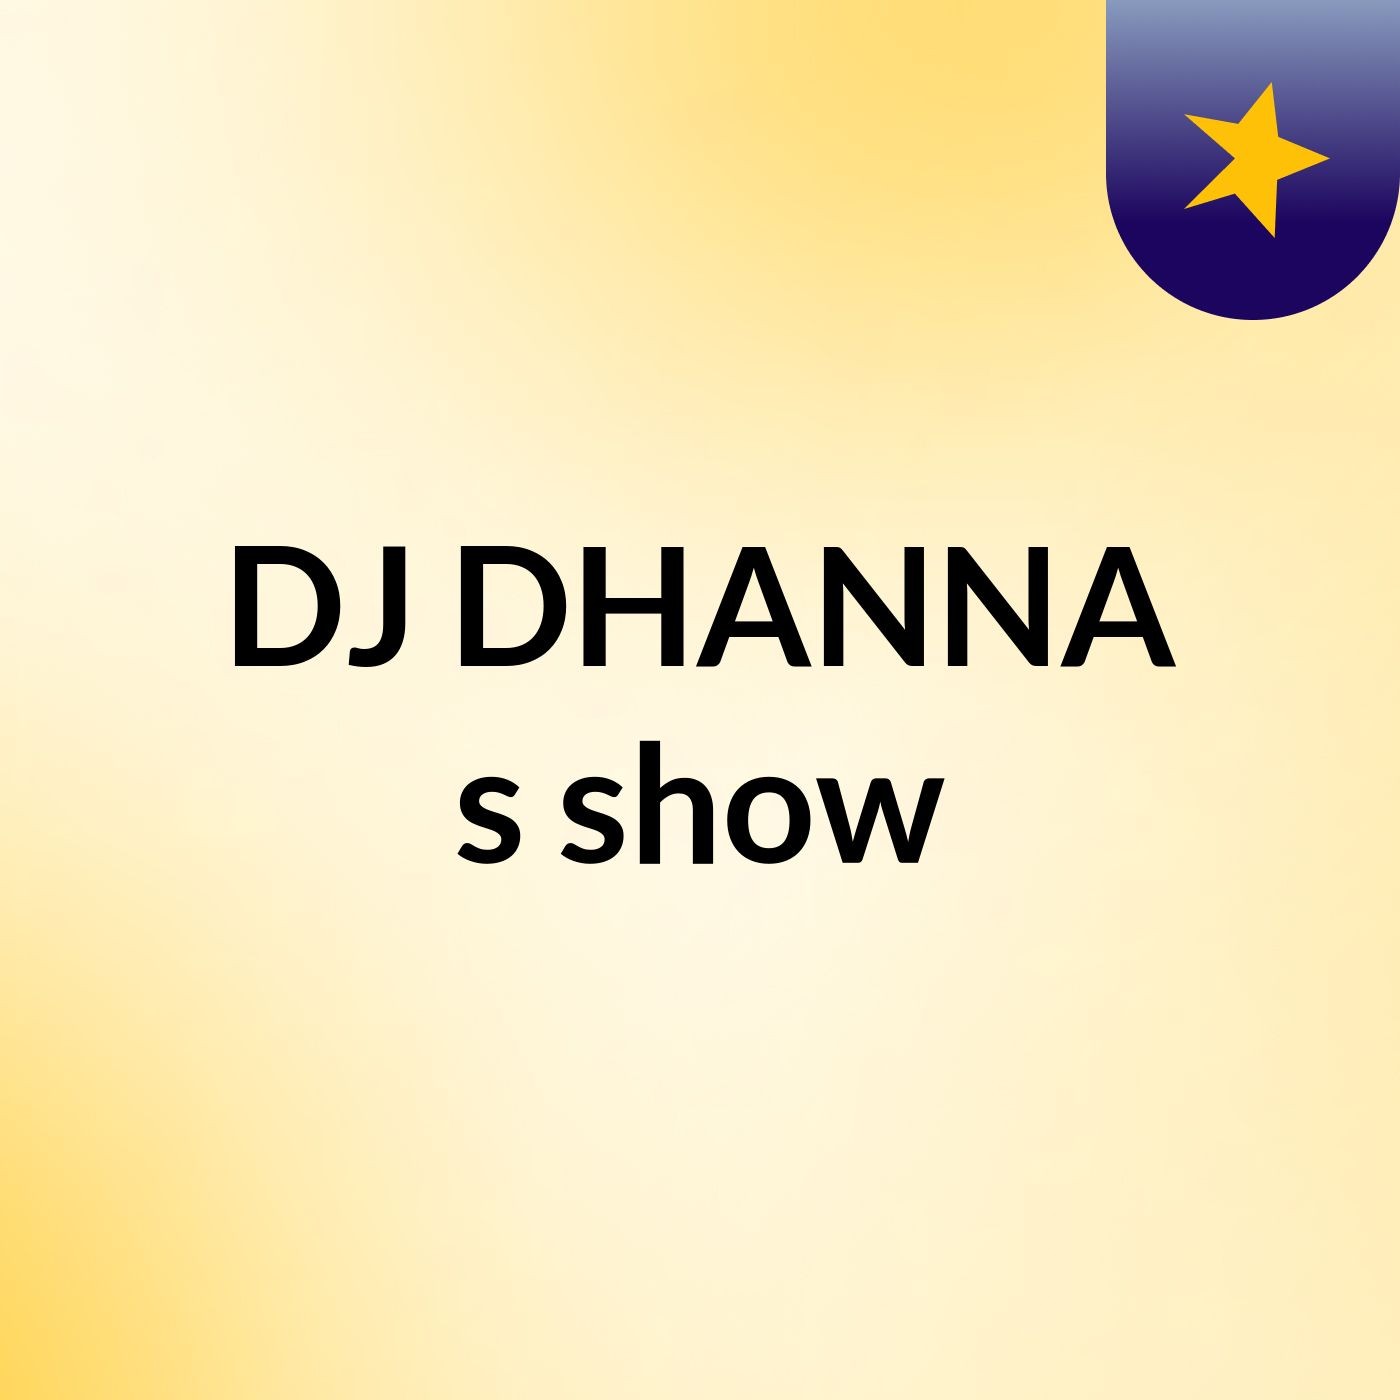 DJ DHANNA's show